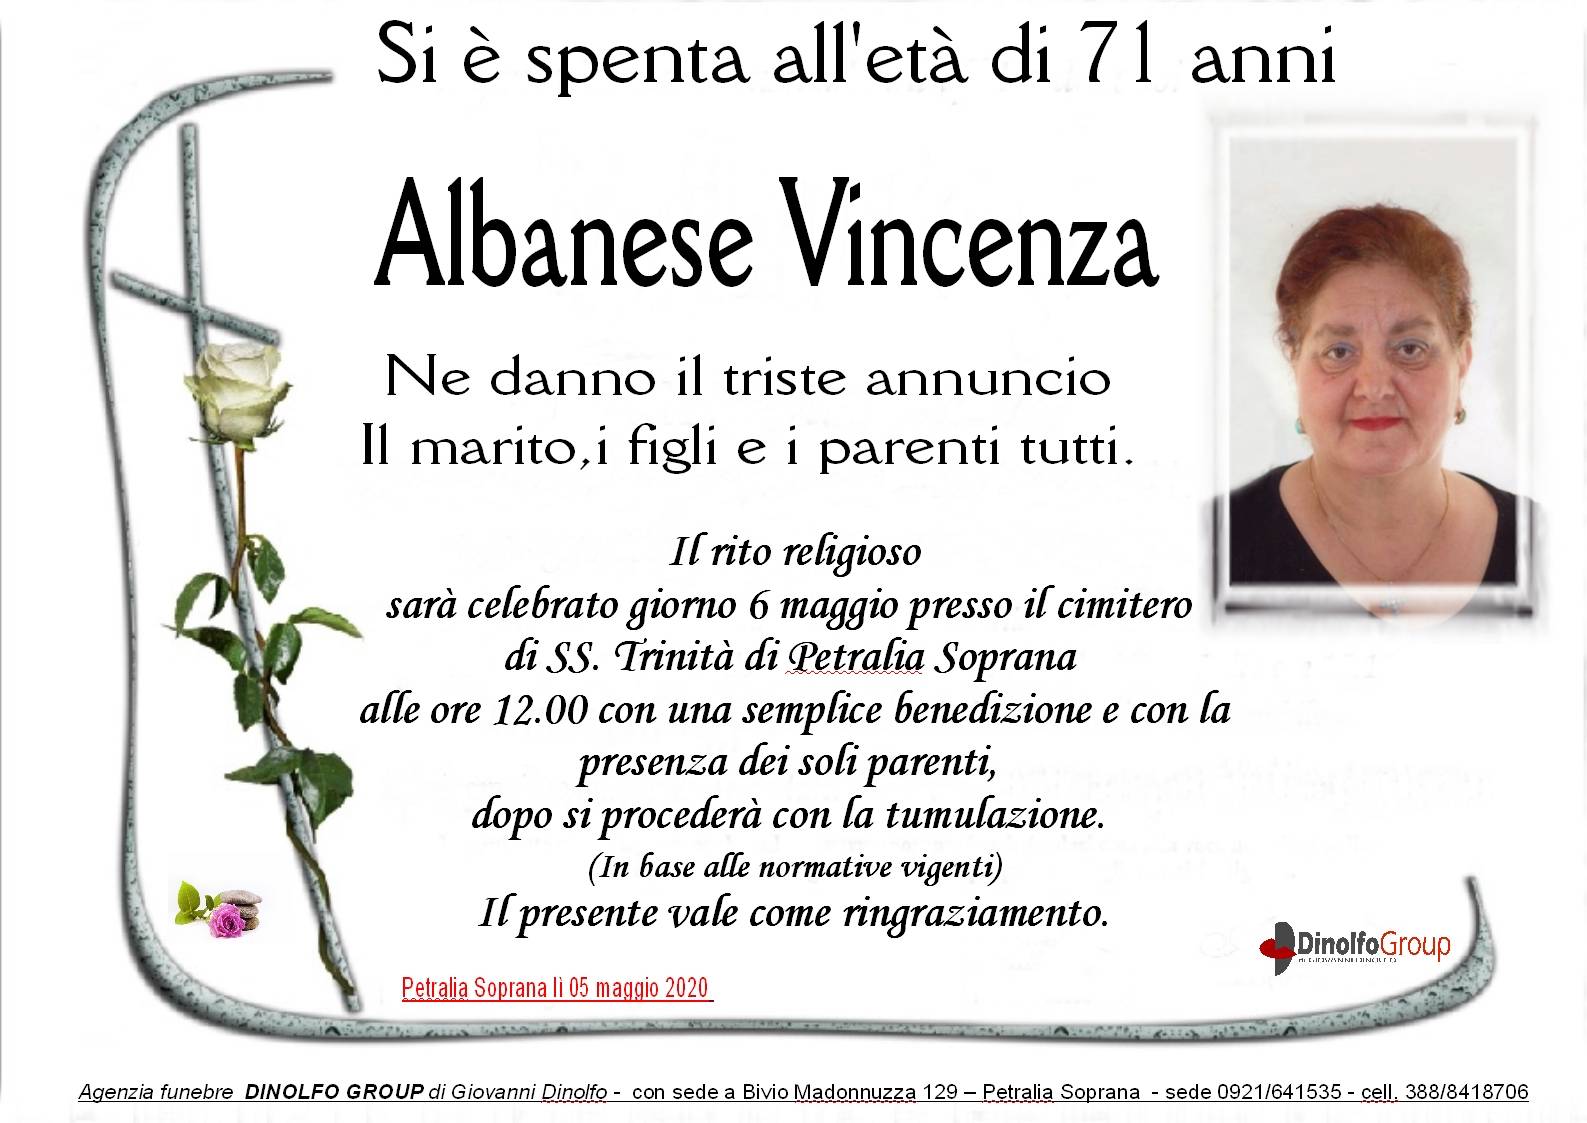 Vincenza Albanese